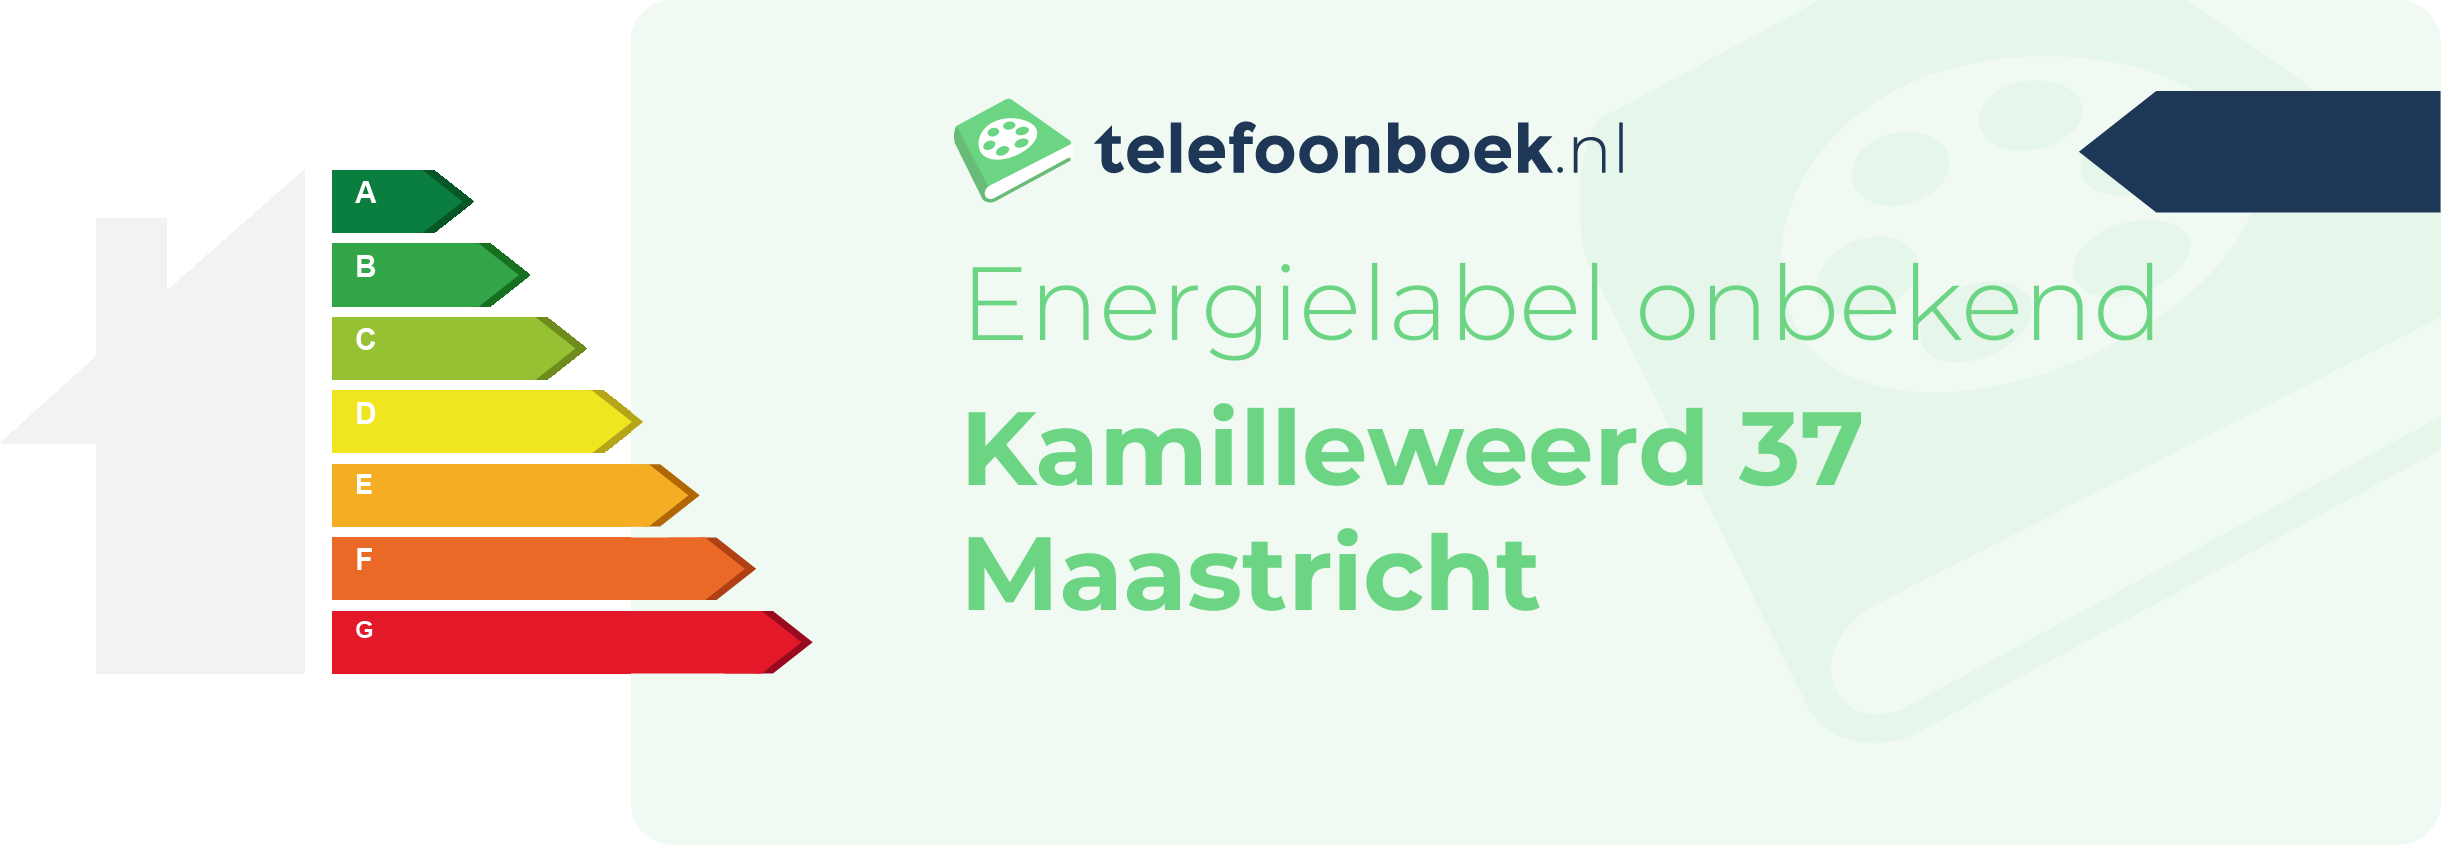 Energielabel Kamilleweerd 37 Maastricht